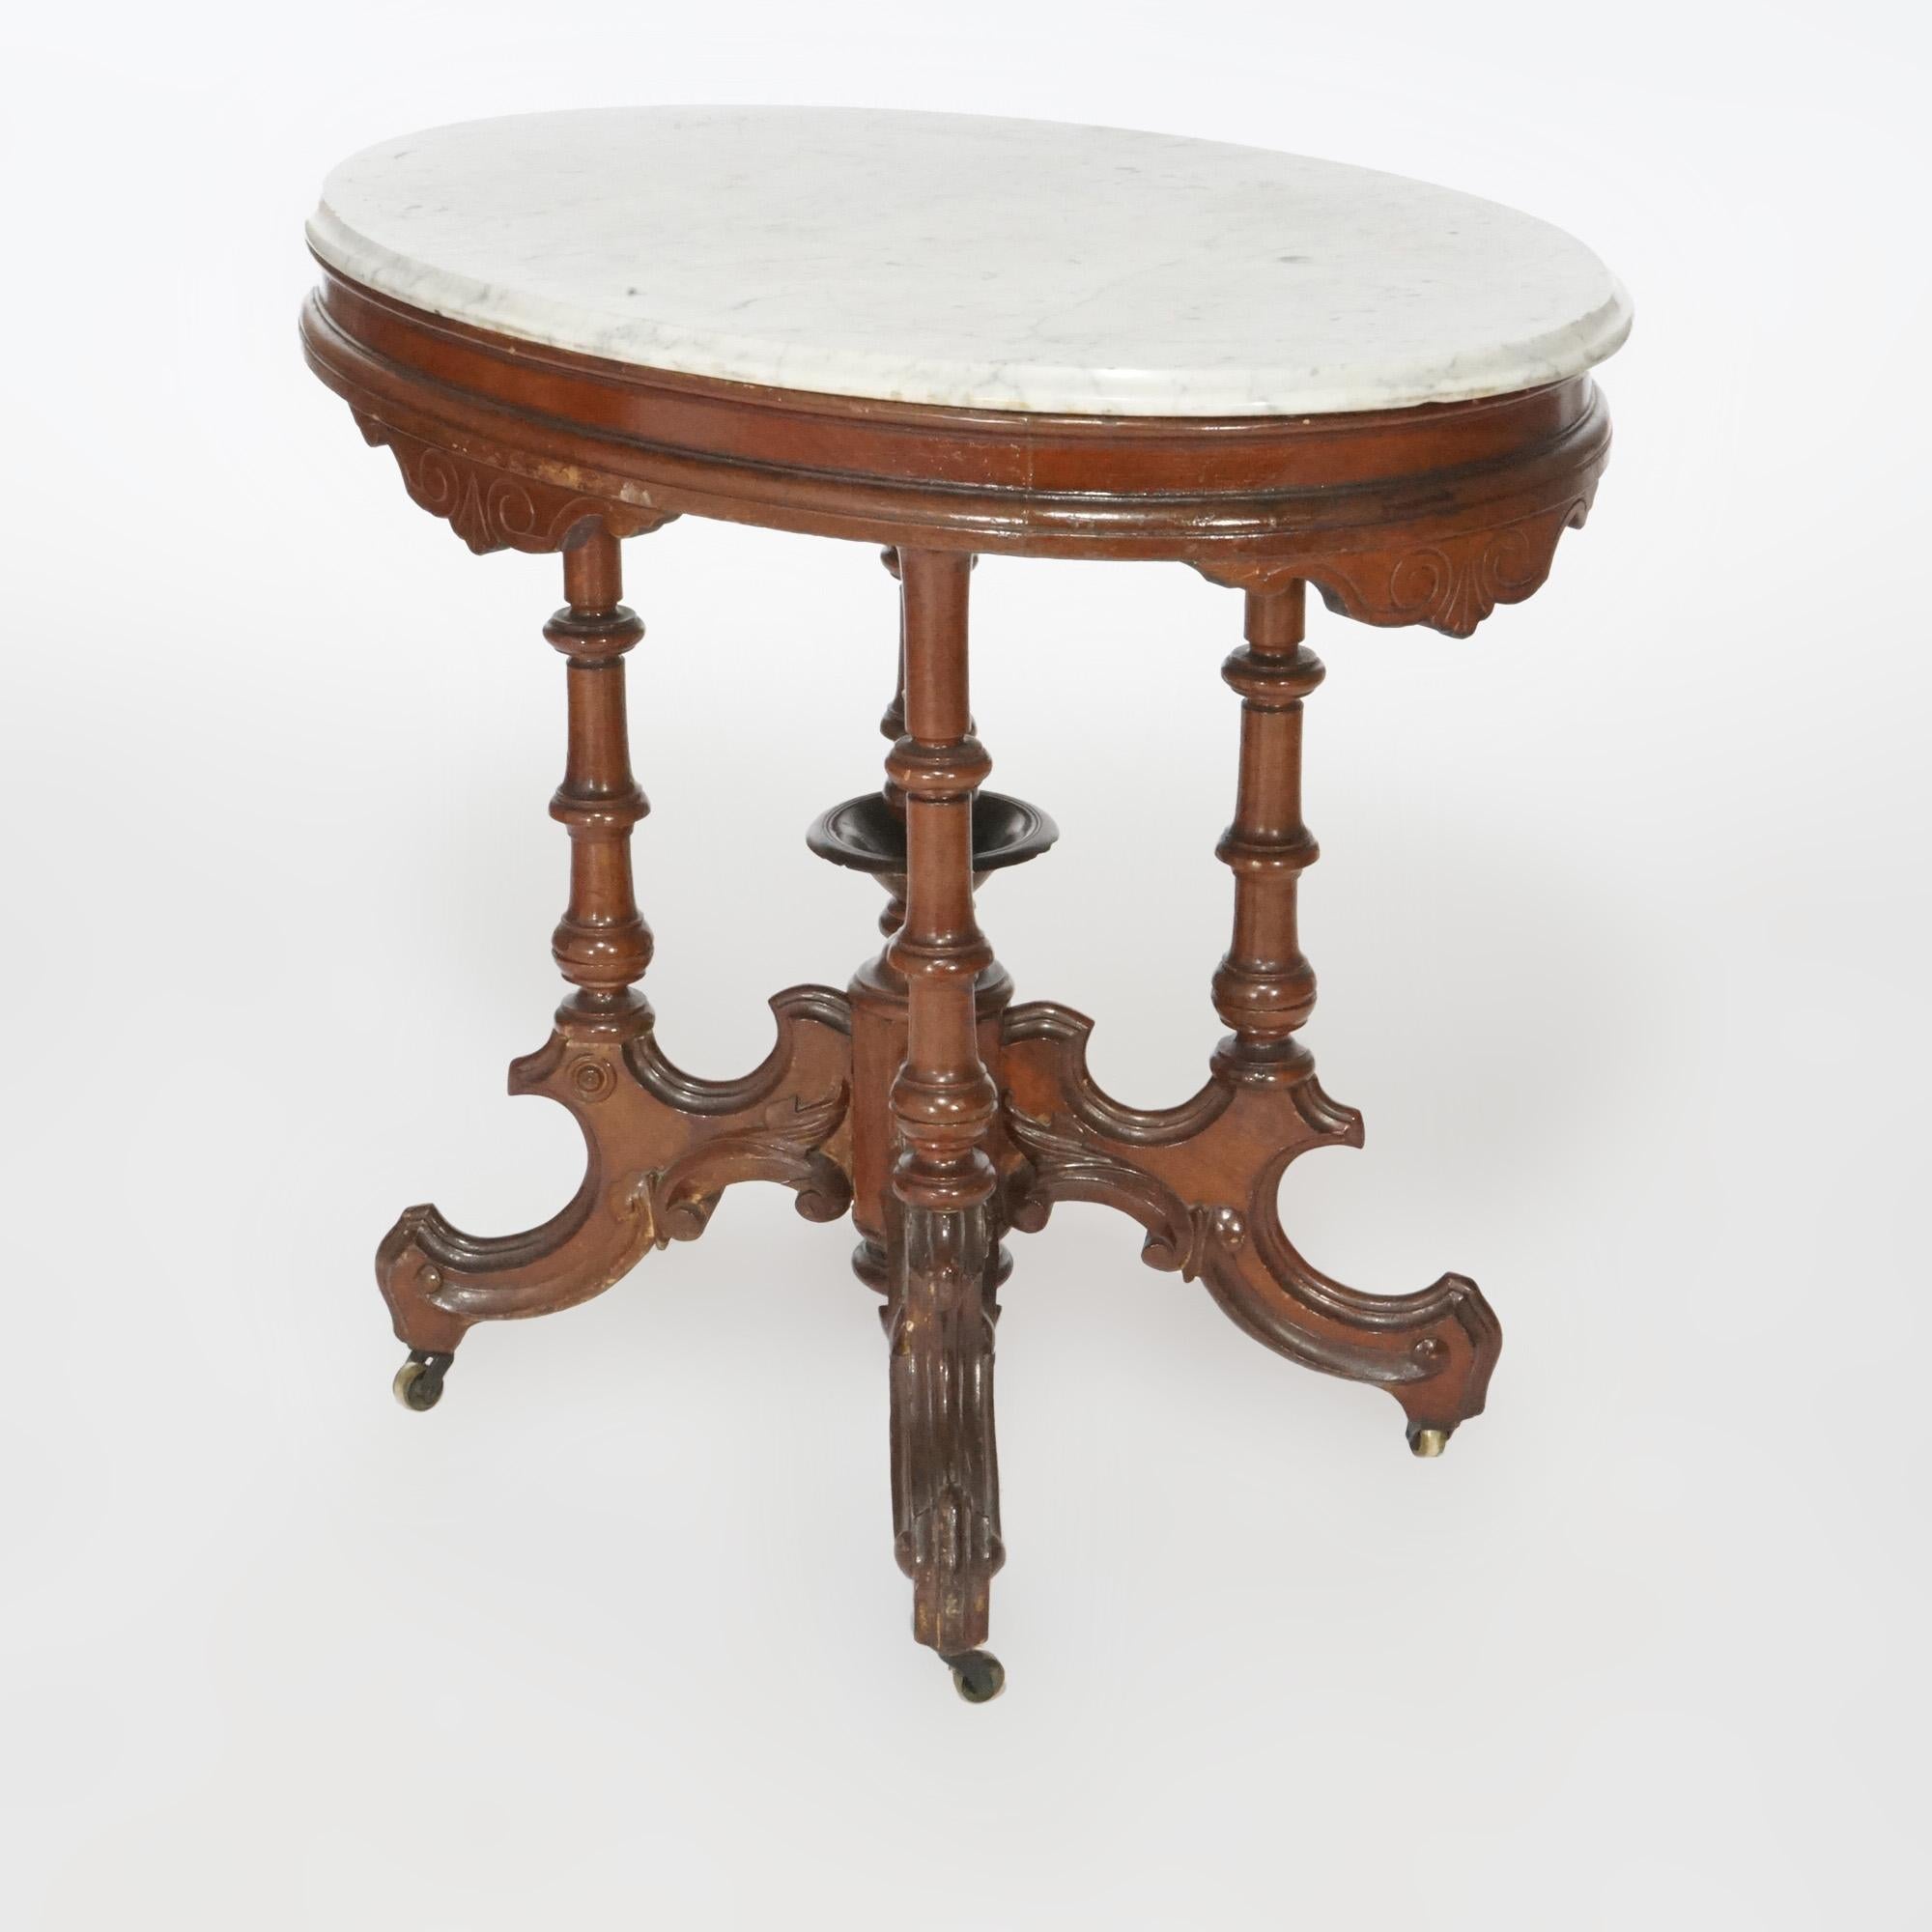 Antique Renaissance Revival Walnut Oval Marble Top Parlor Table, circa 1890 For Sale 6